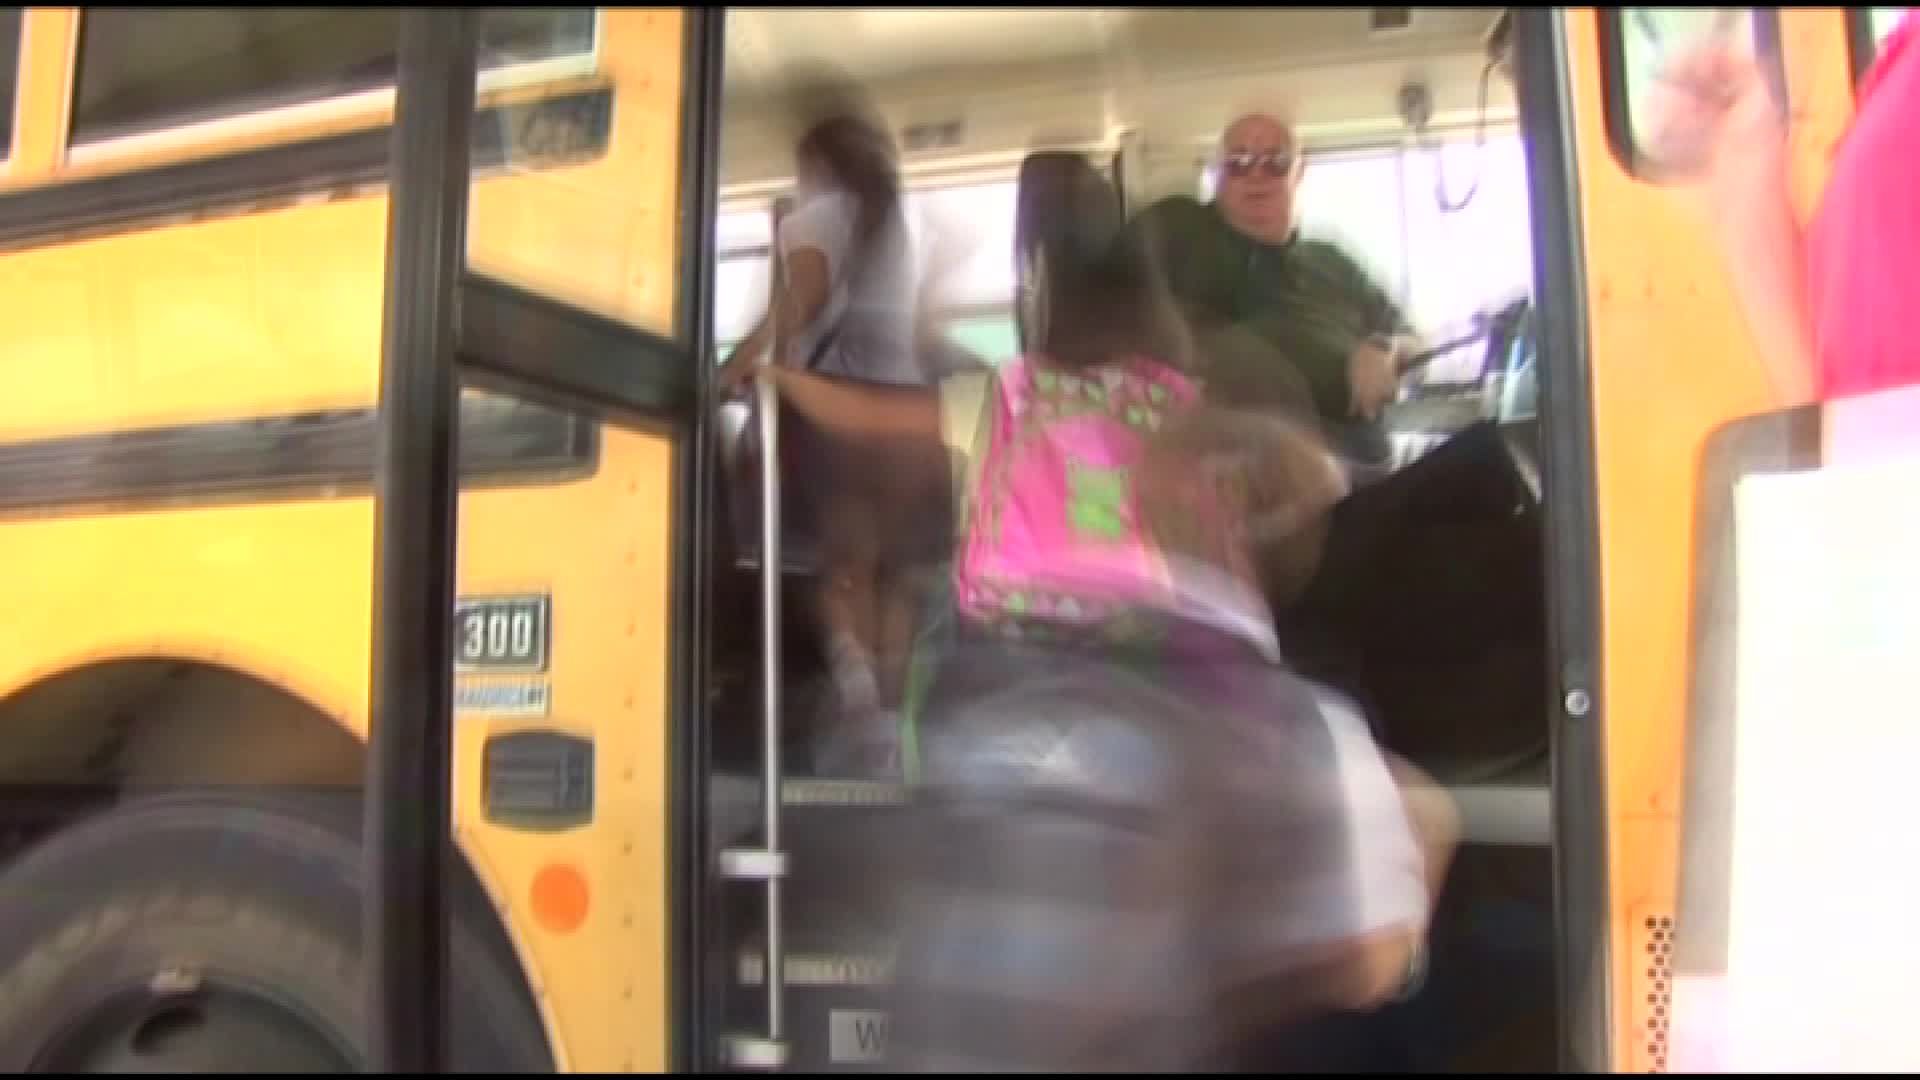 School Public Porn - Sex offenders living near bus stops